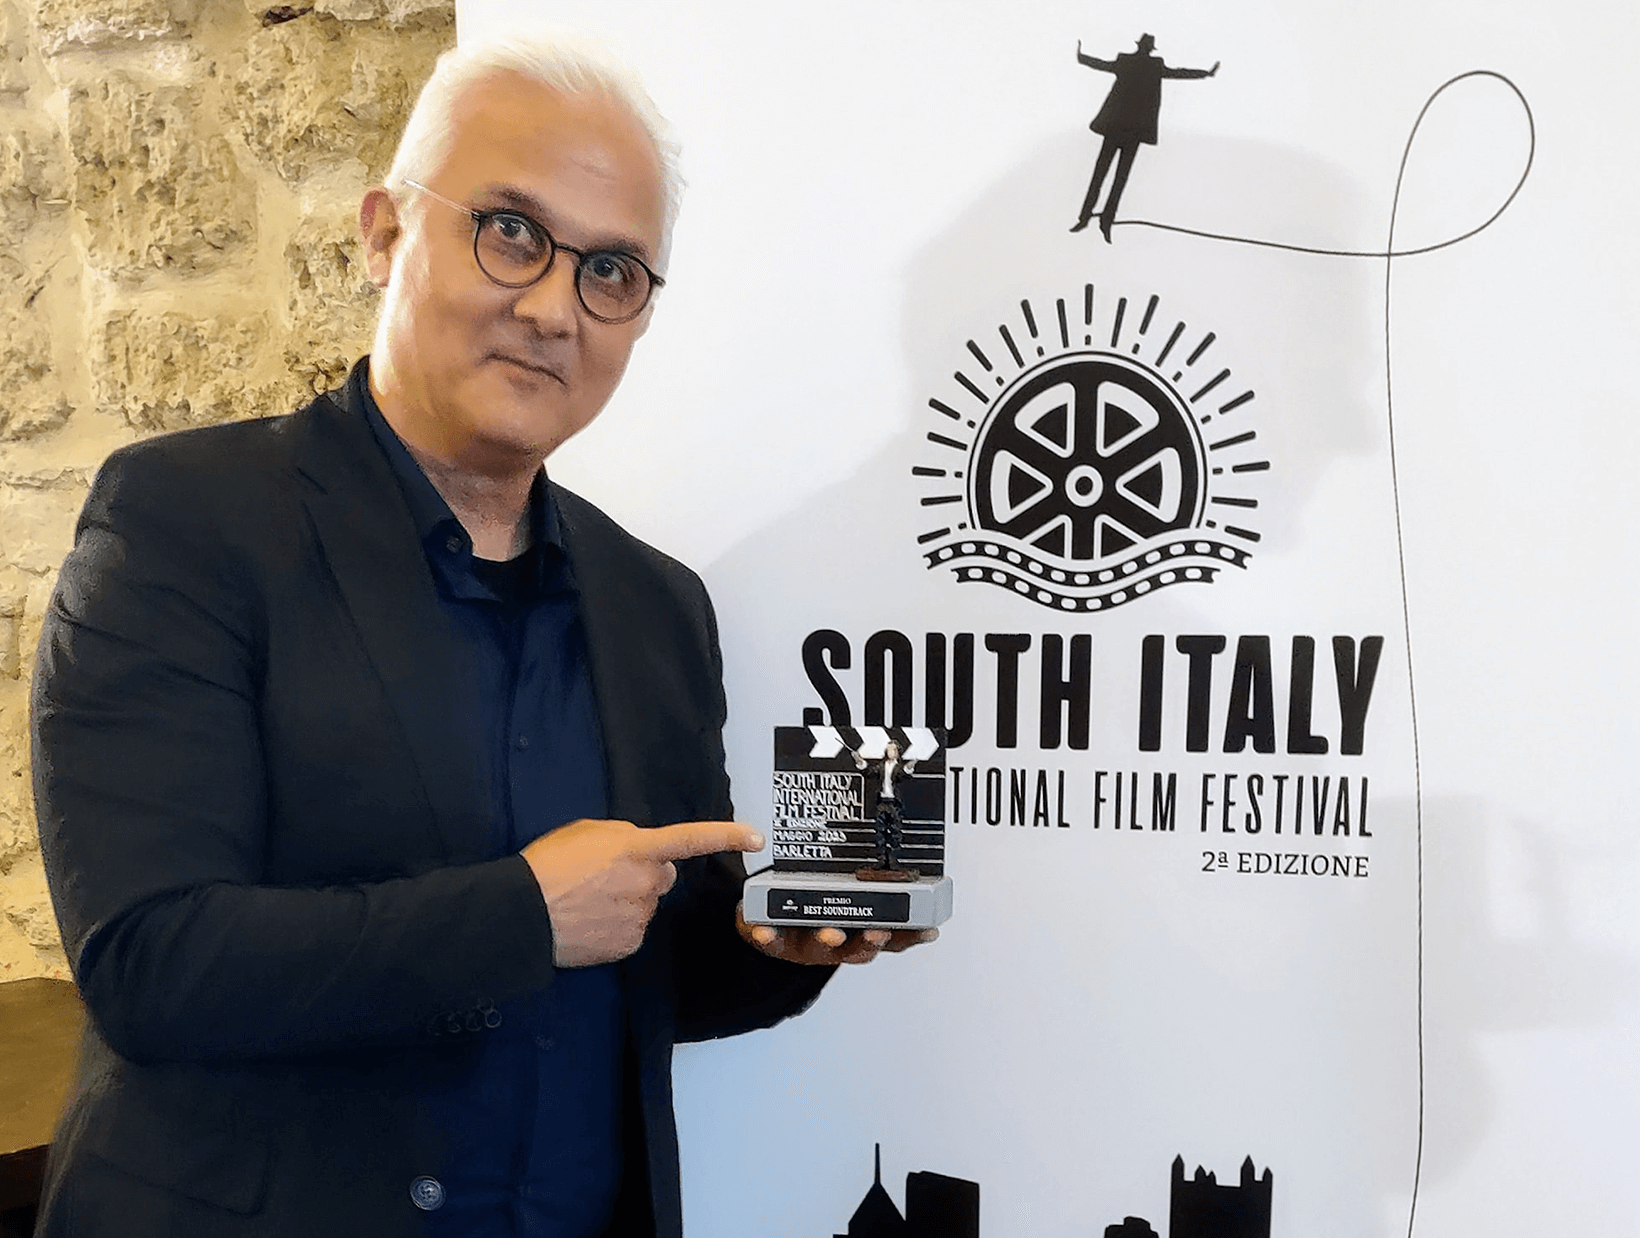 South Italy International Film Festival